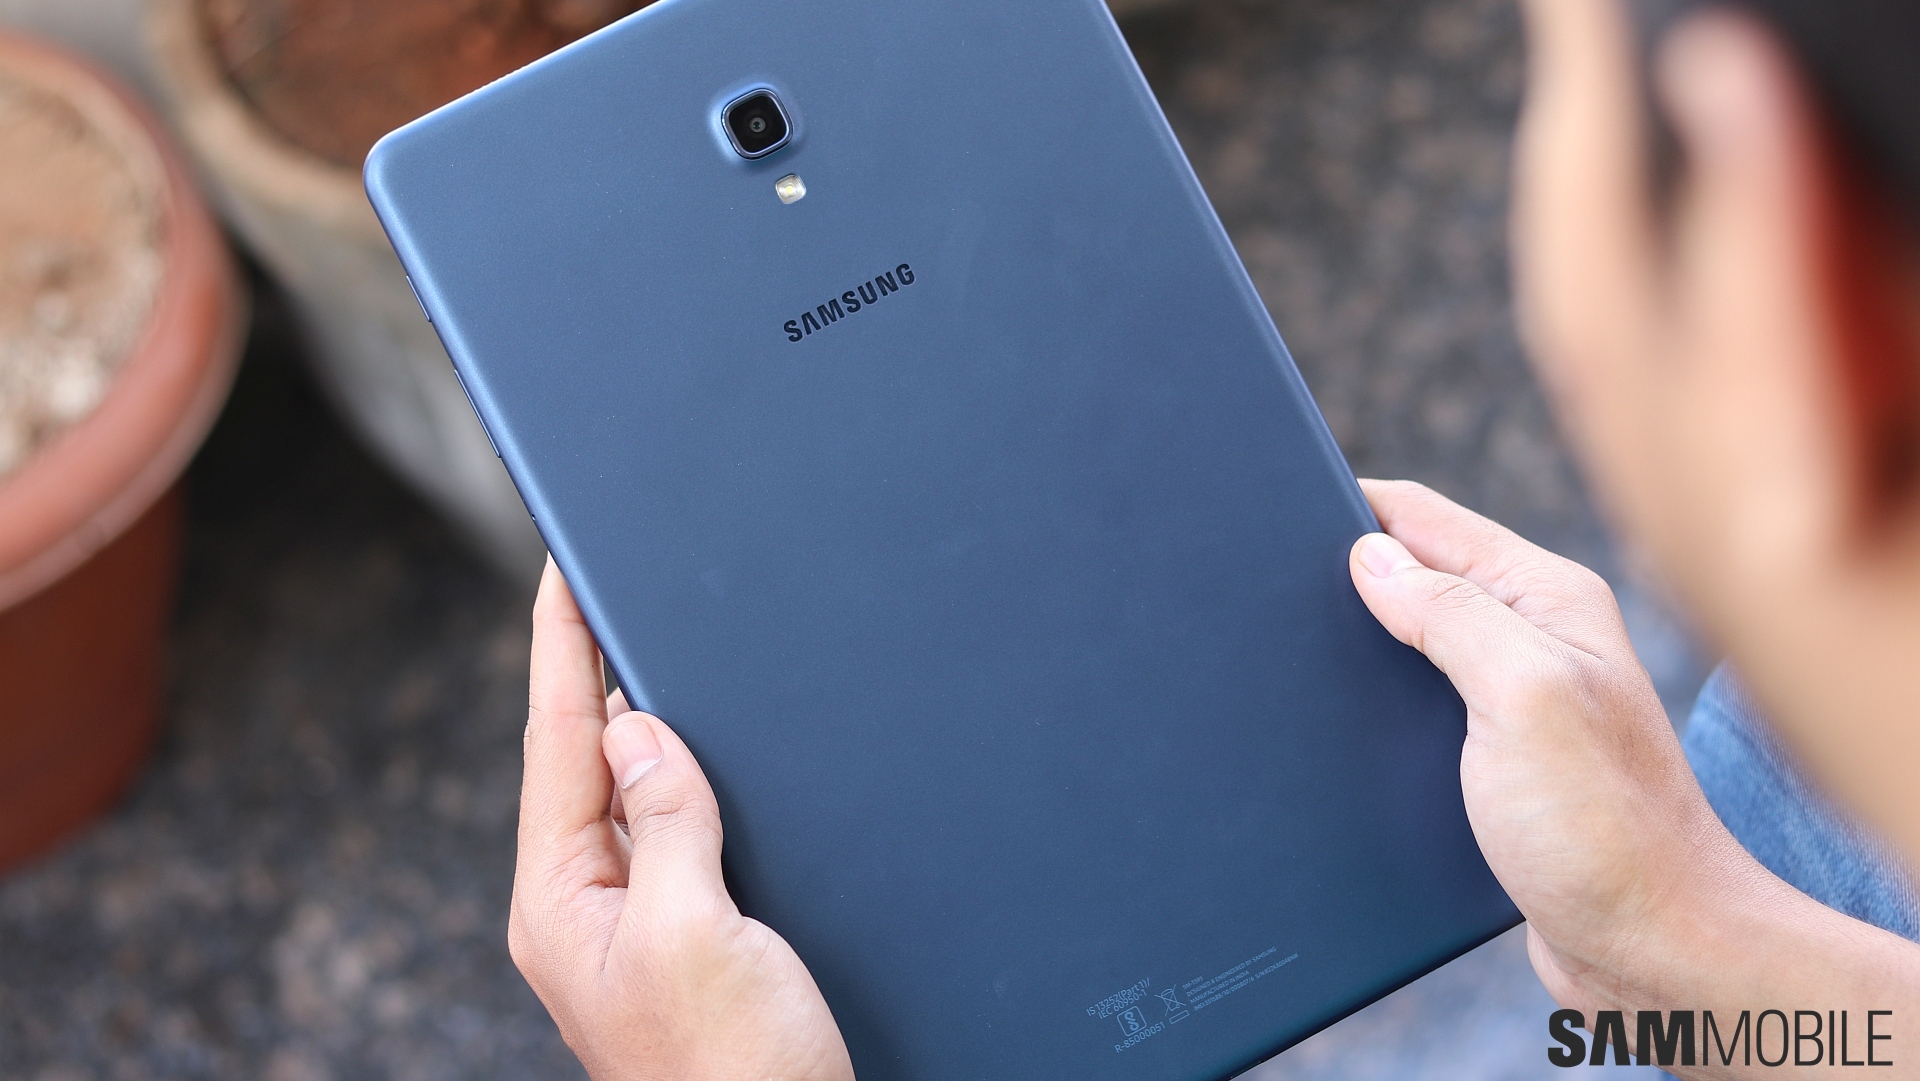 Samsung Galaxy Tab A 10.5 An unassuming tablet - SamMobile